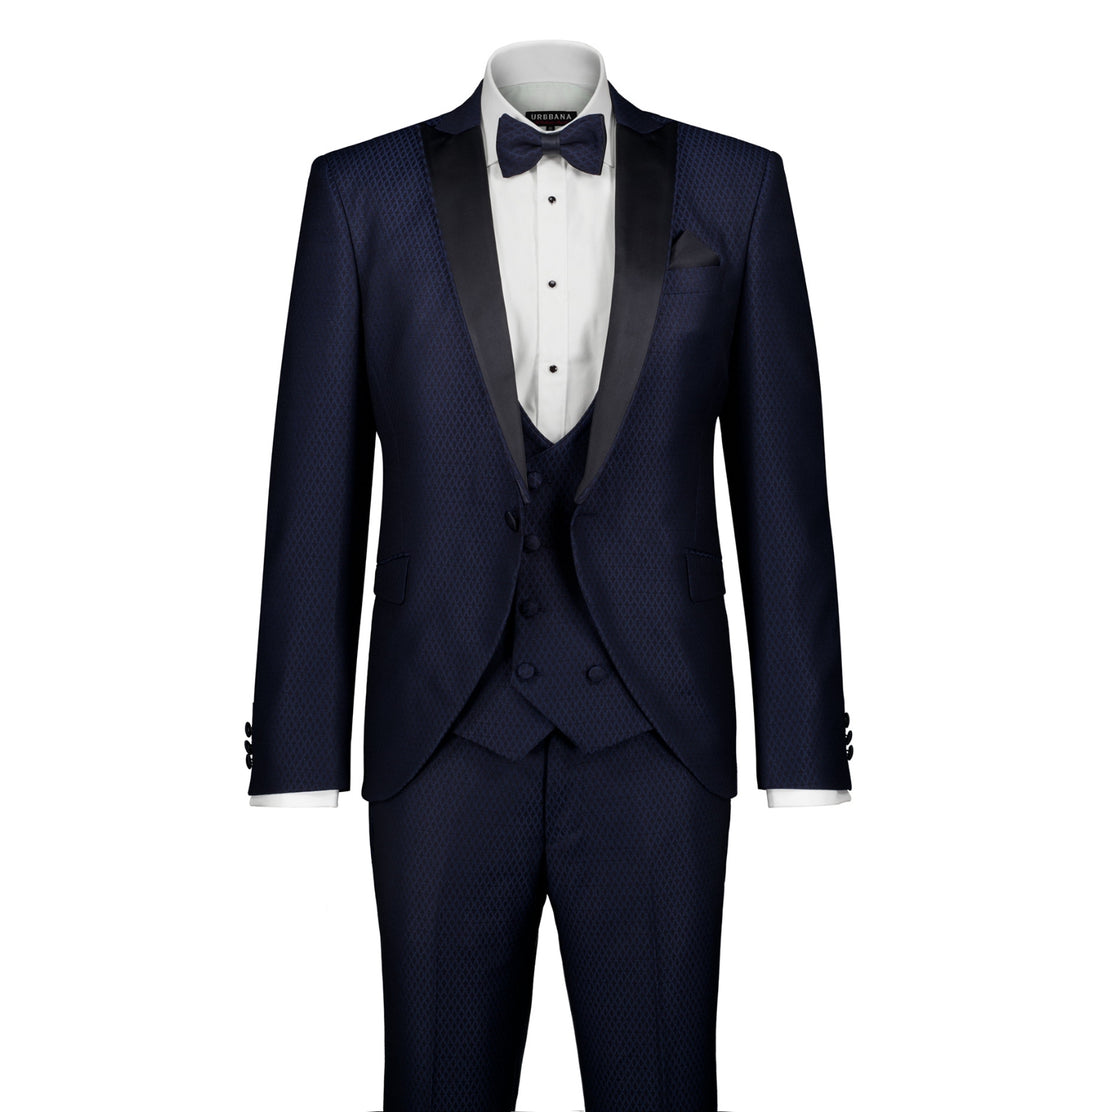 The Elmas Ceremony Suit - Navy - Suit by Urbbana